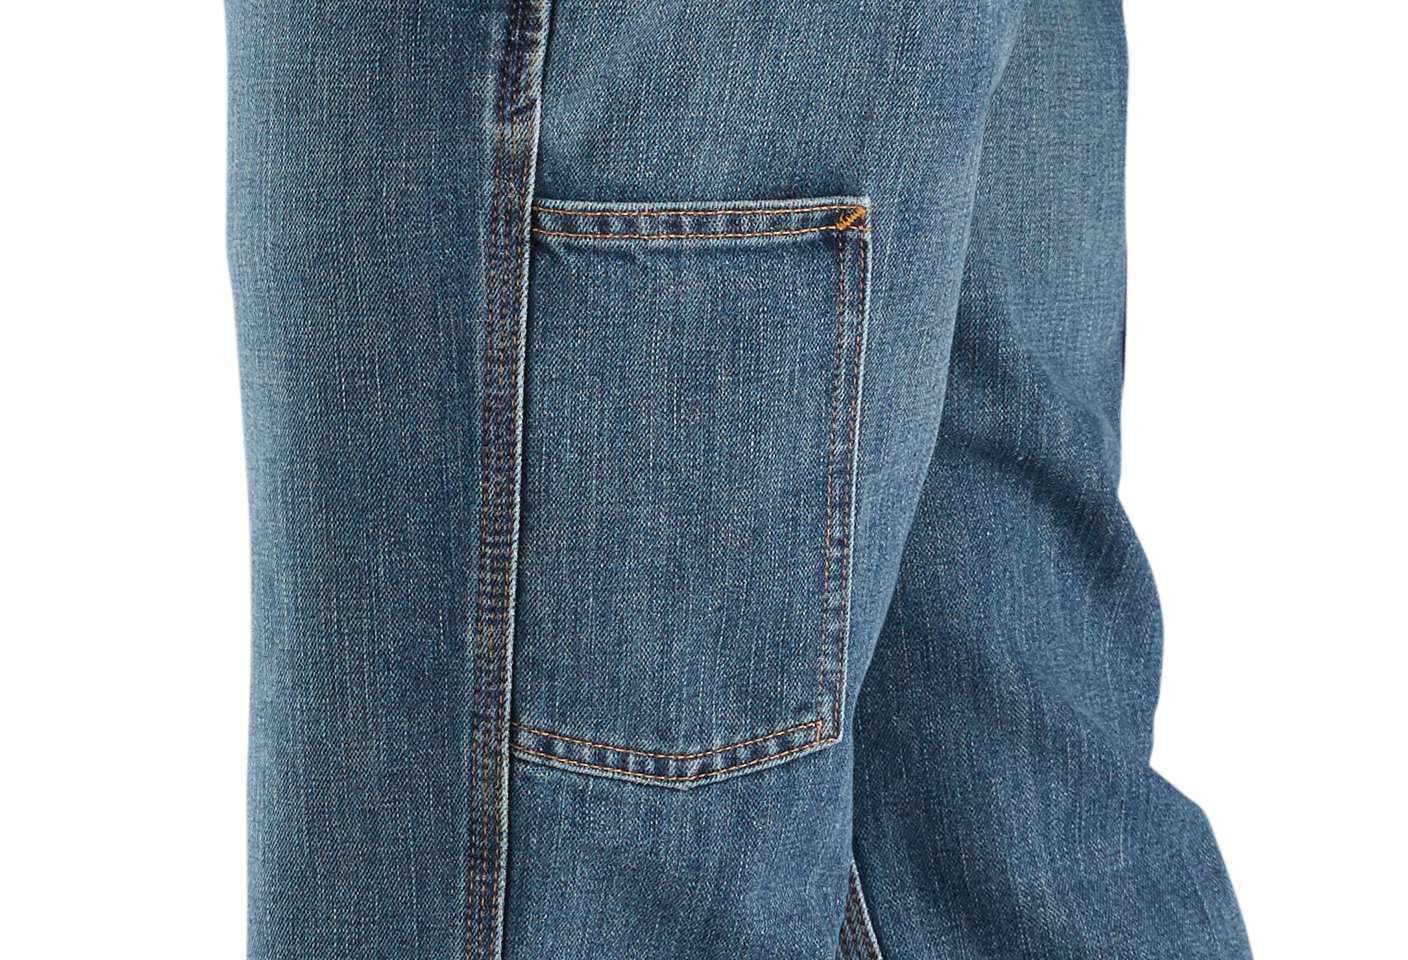 NEW Carhartt Hose Denim Multi Pocket Tech Jeans men NEU Männer pant 